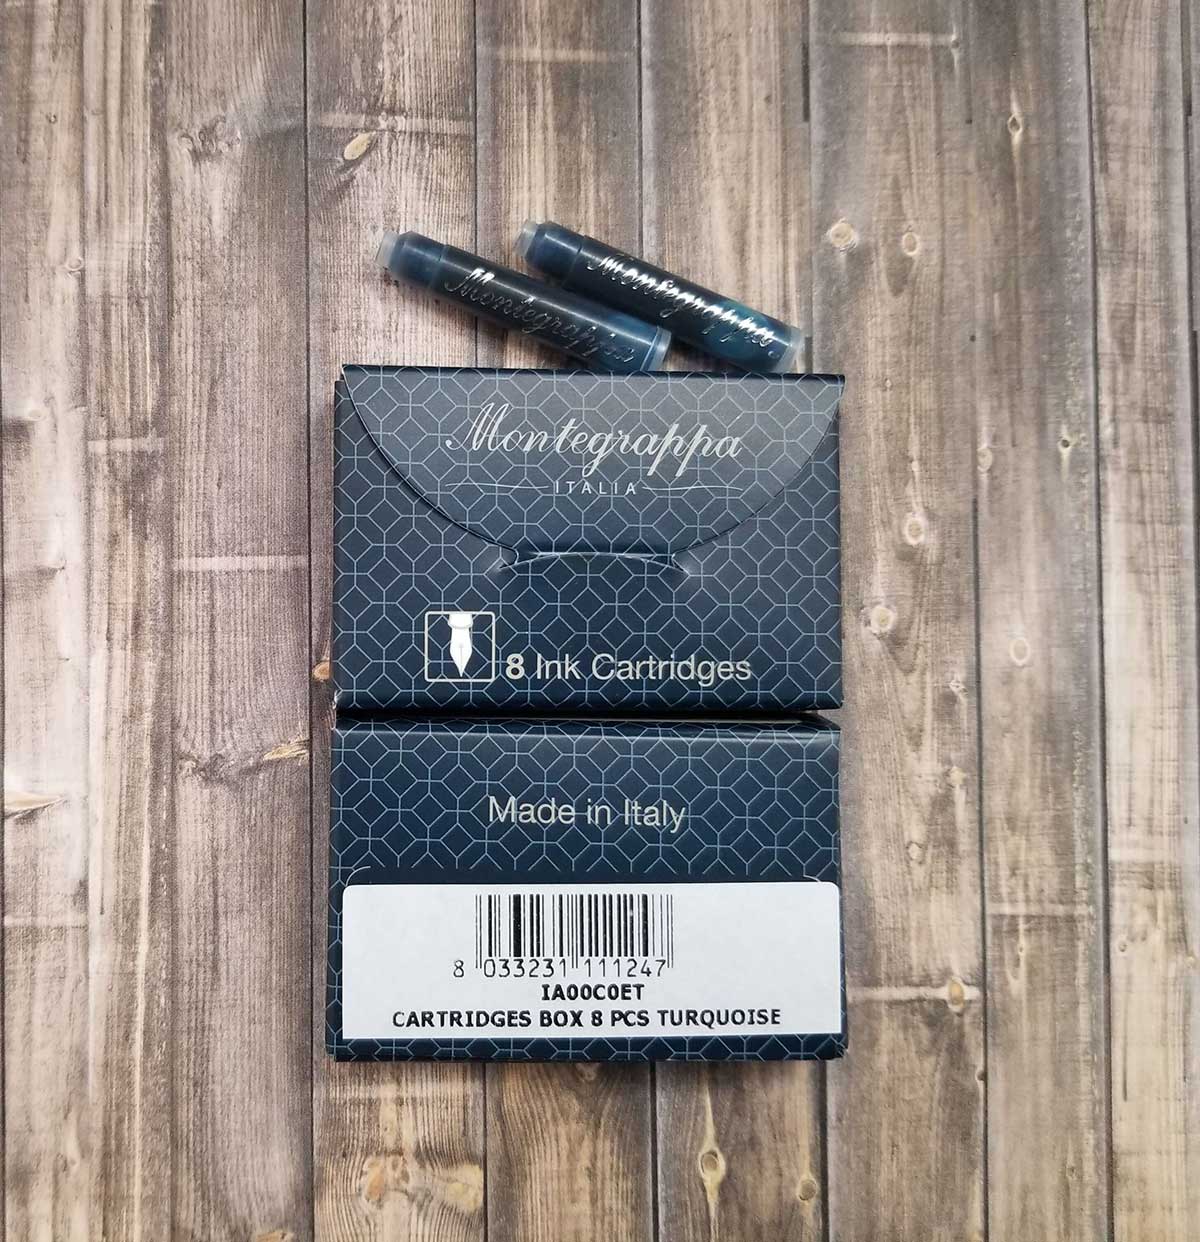 Montegrappa Fountain Pen Refill Ink Cartridges